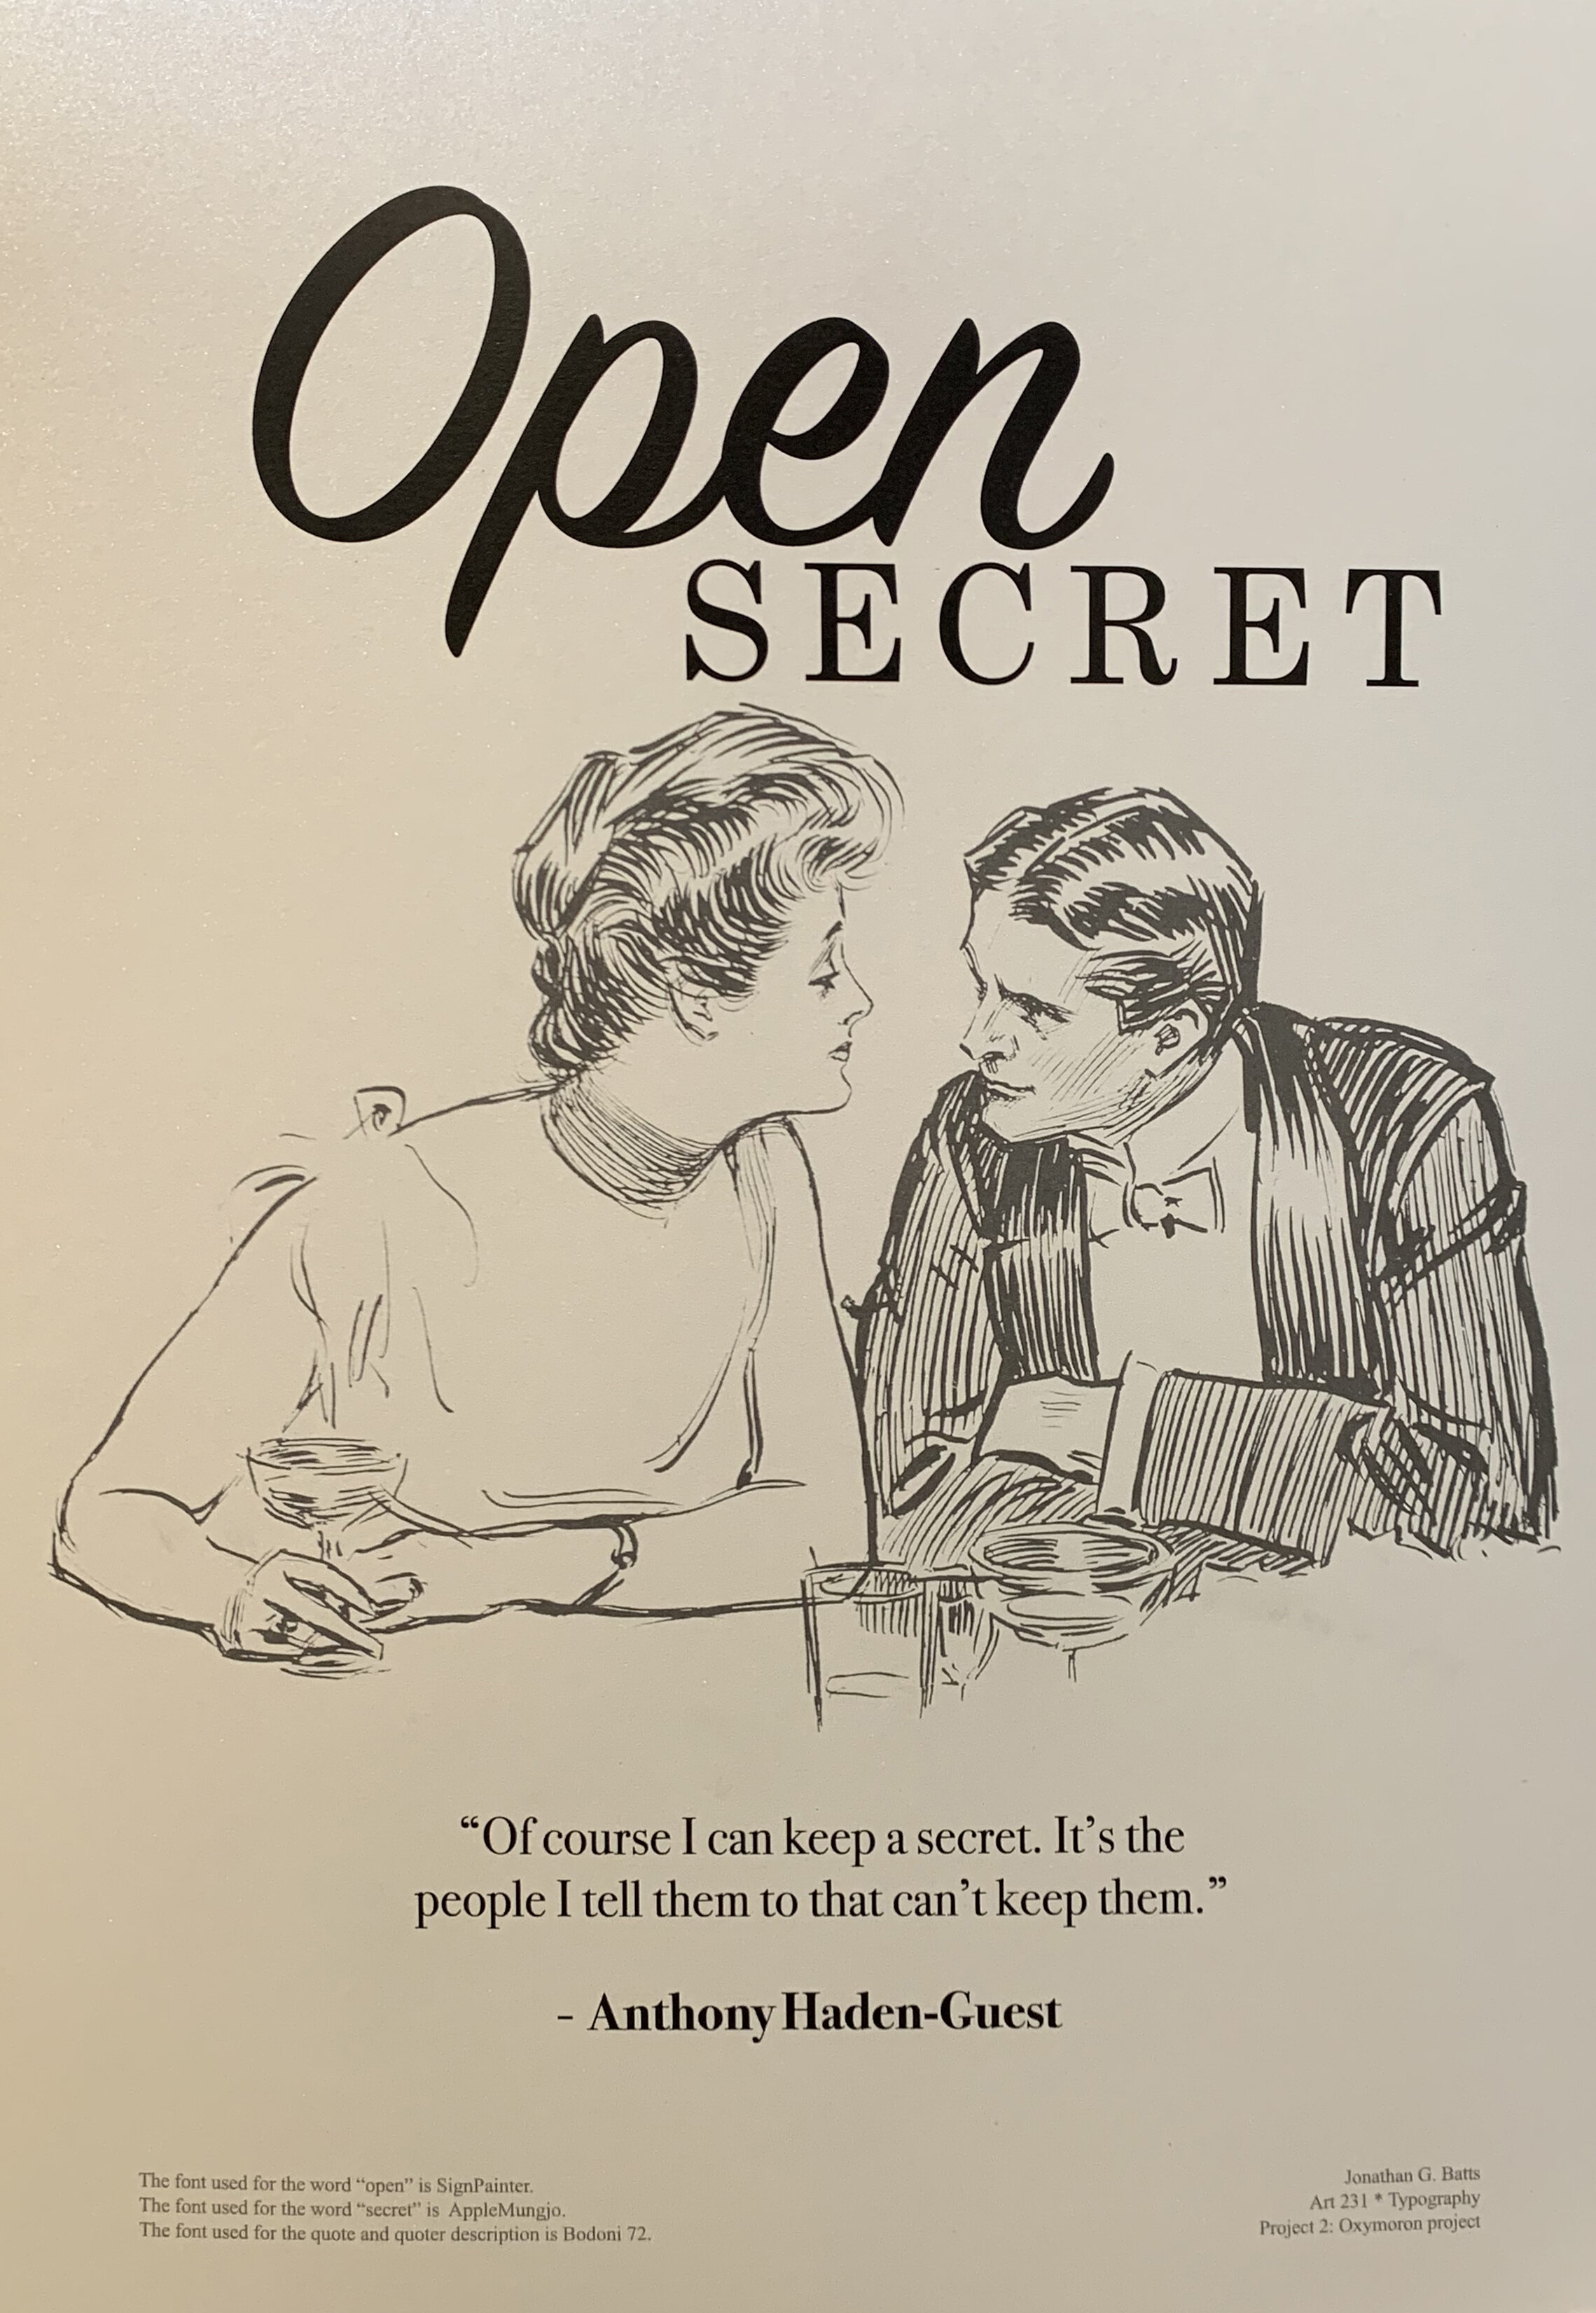 Jonathan Batts, "Open Secret"